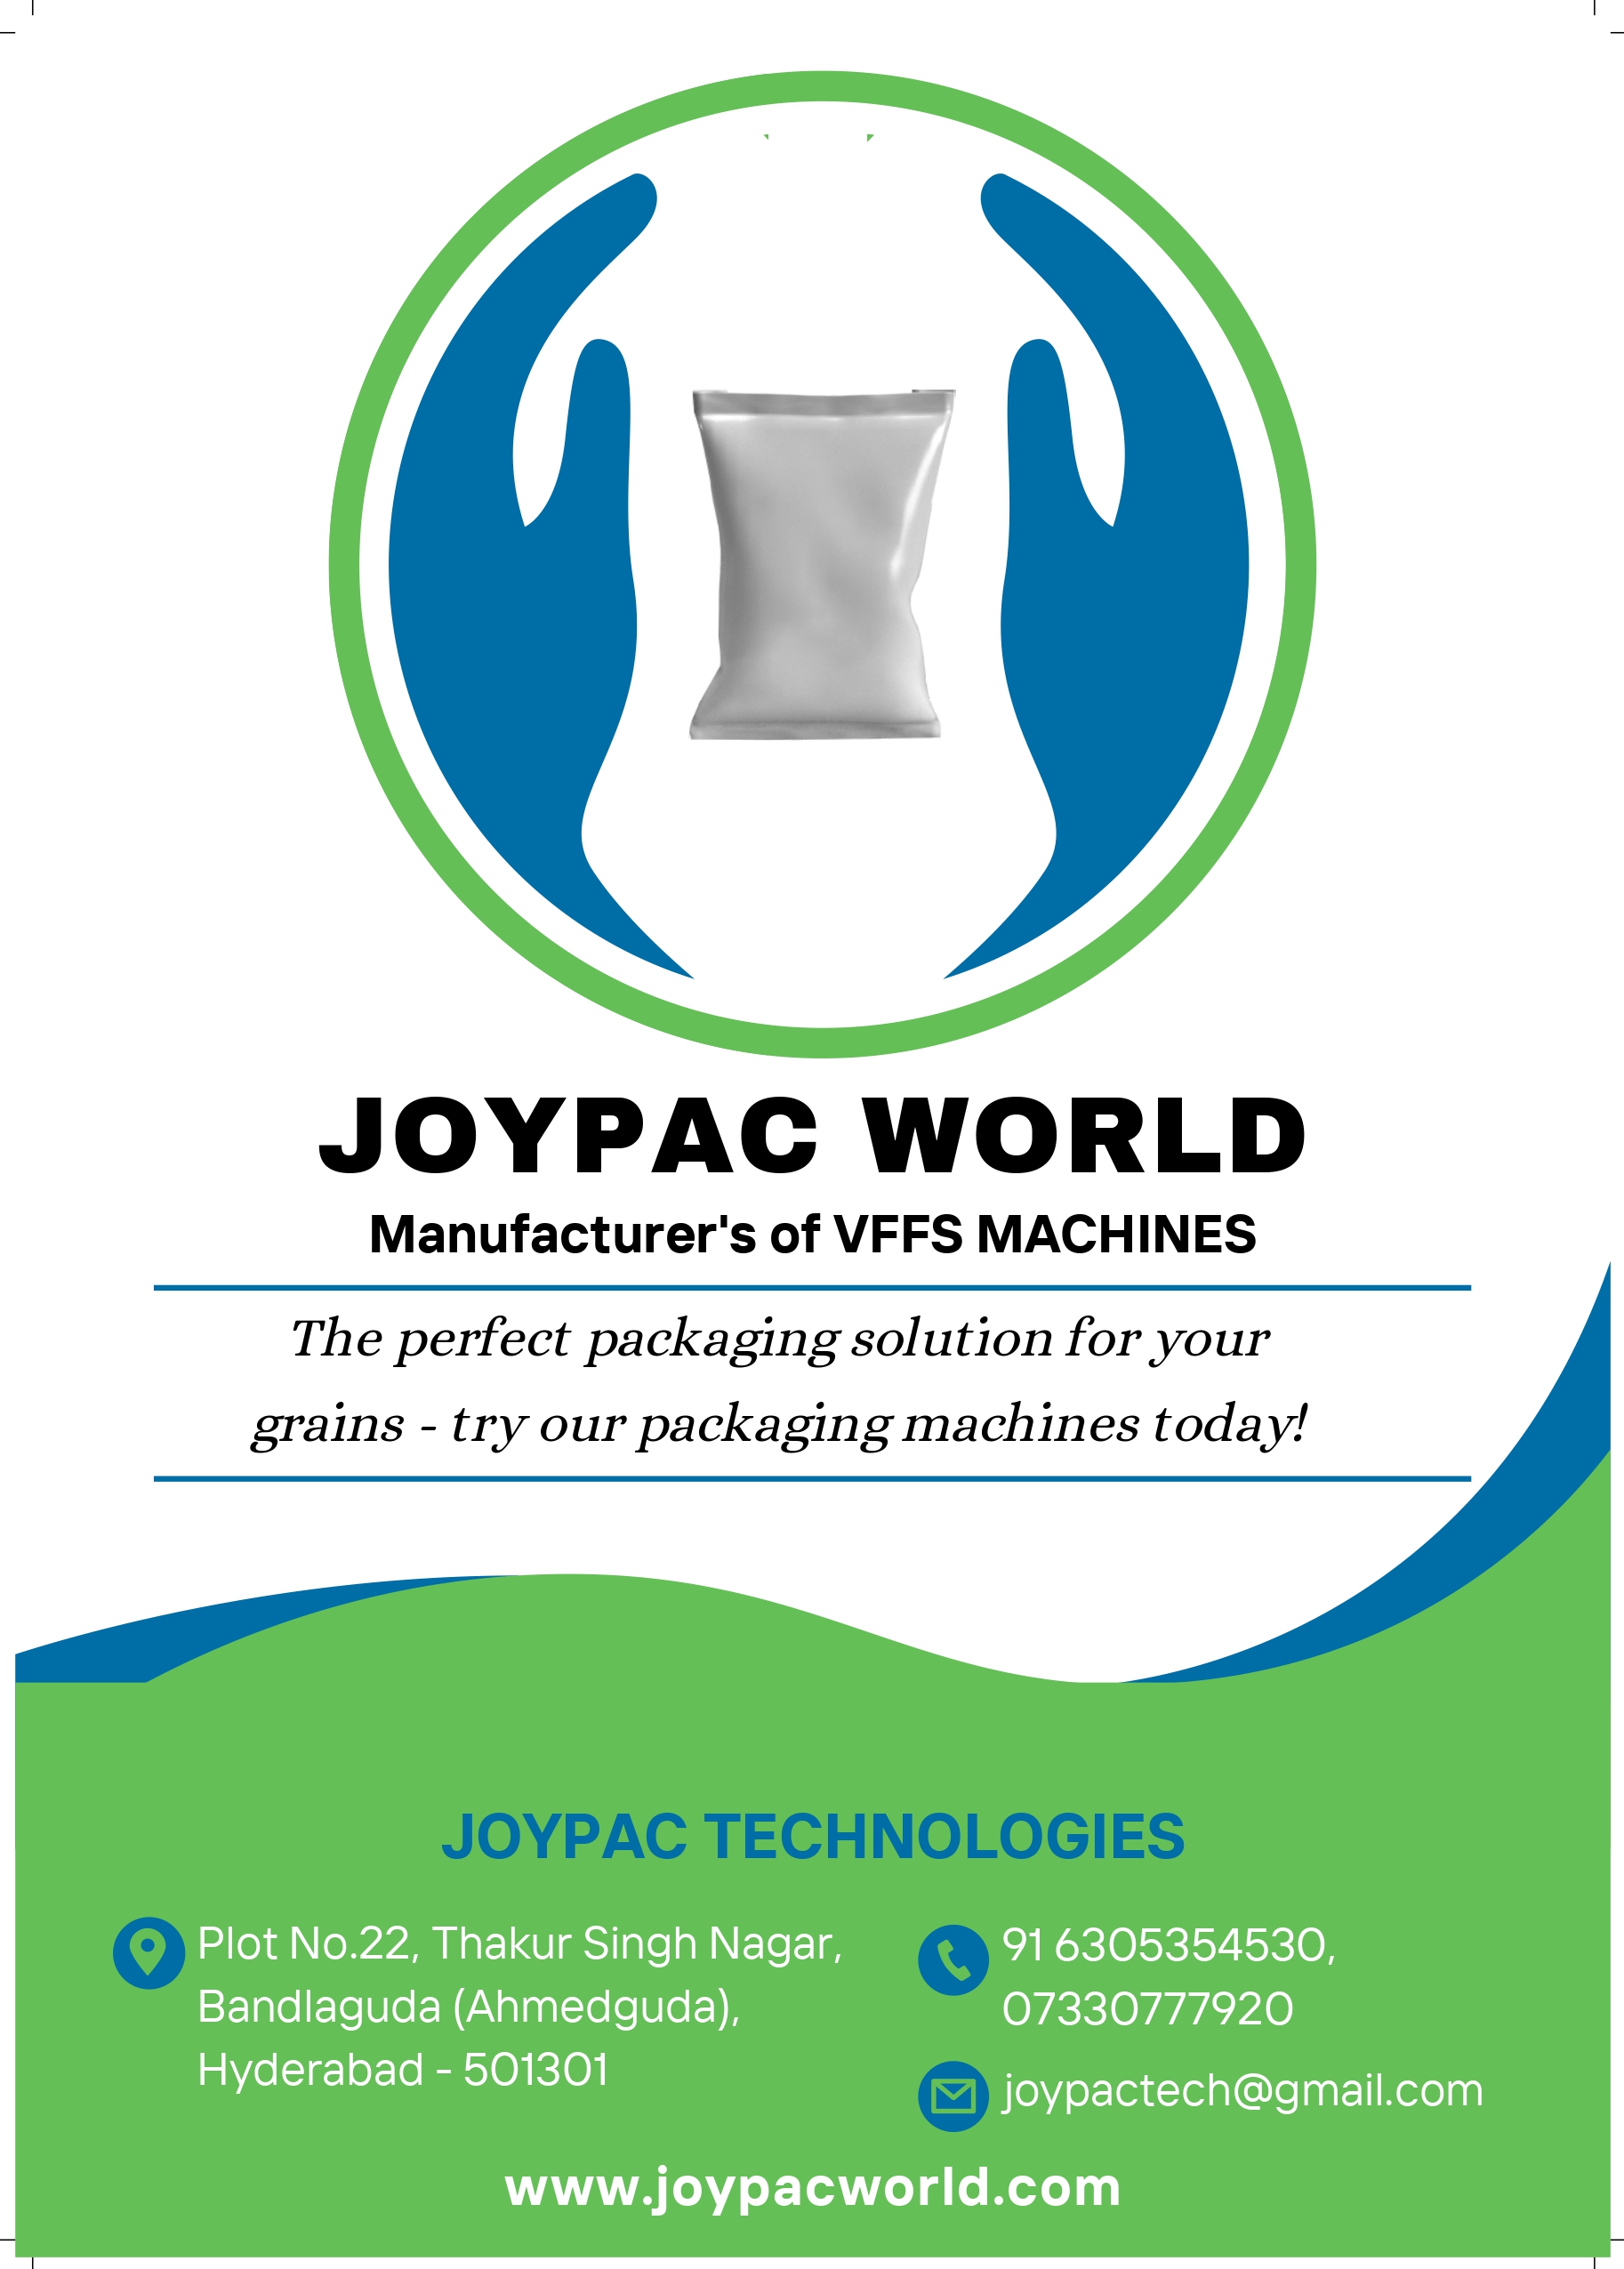 JOYPAC WORLD TECHNOLOGIES